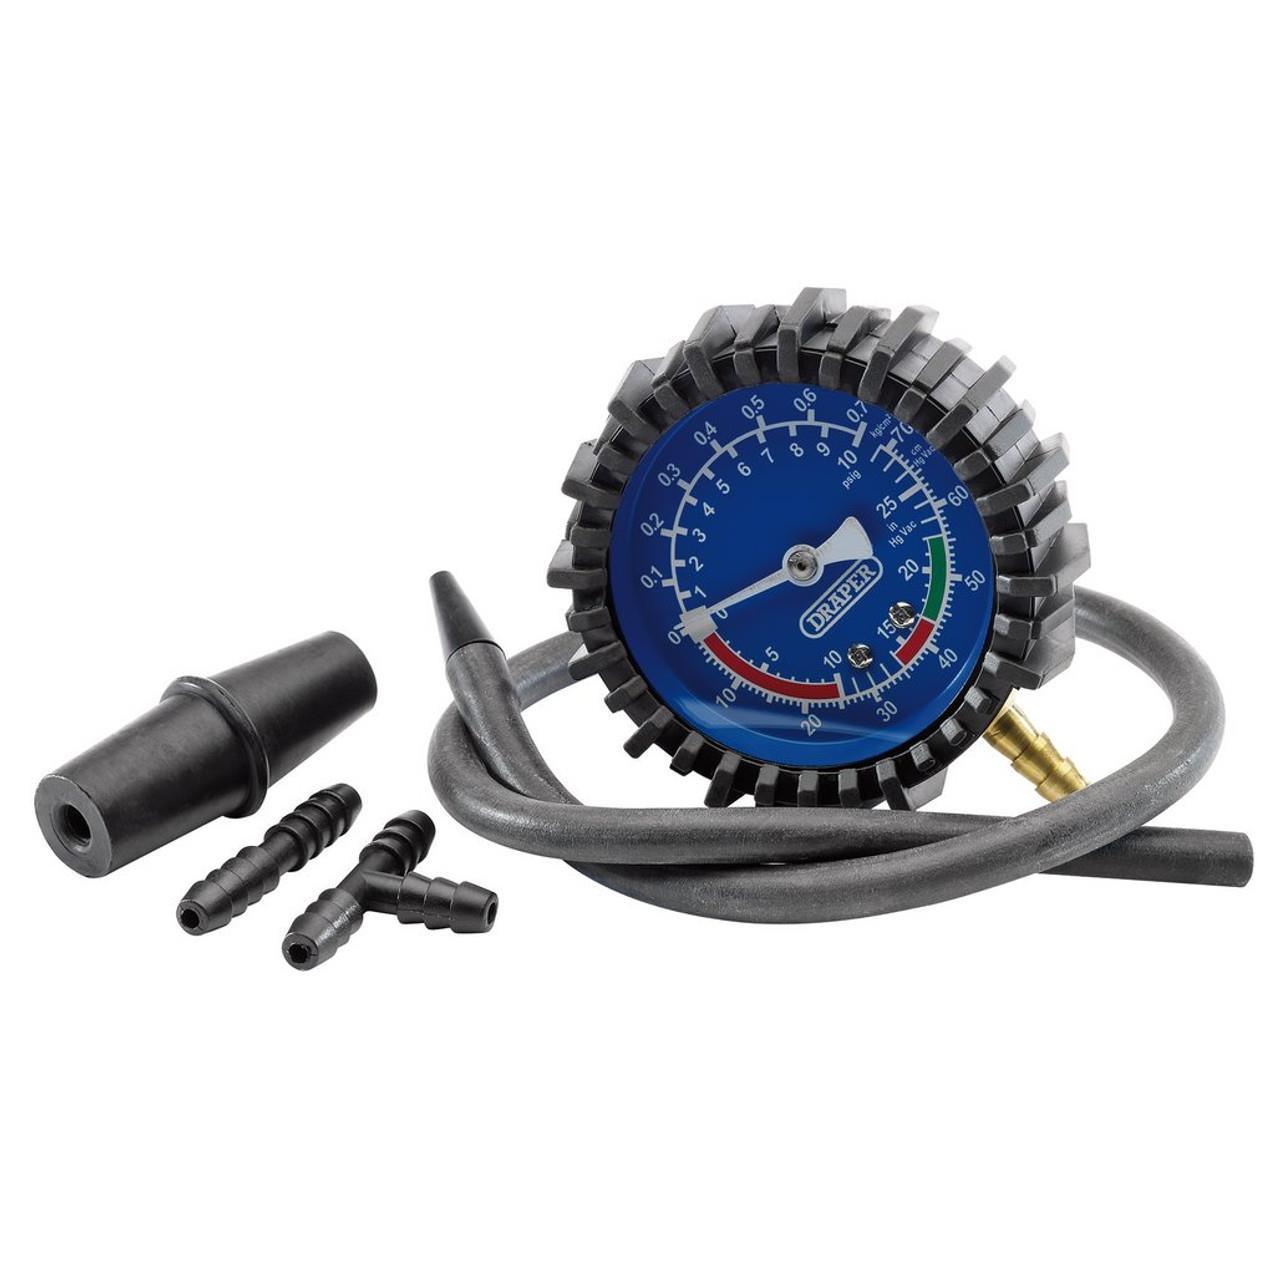 Draper 5 Piece Vacuum and Pressure Test Kit 35881 - Tools 2U Direct SW